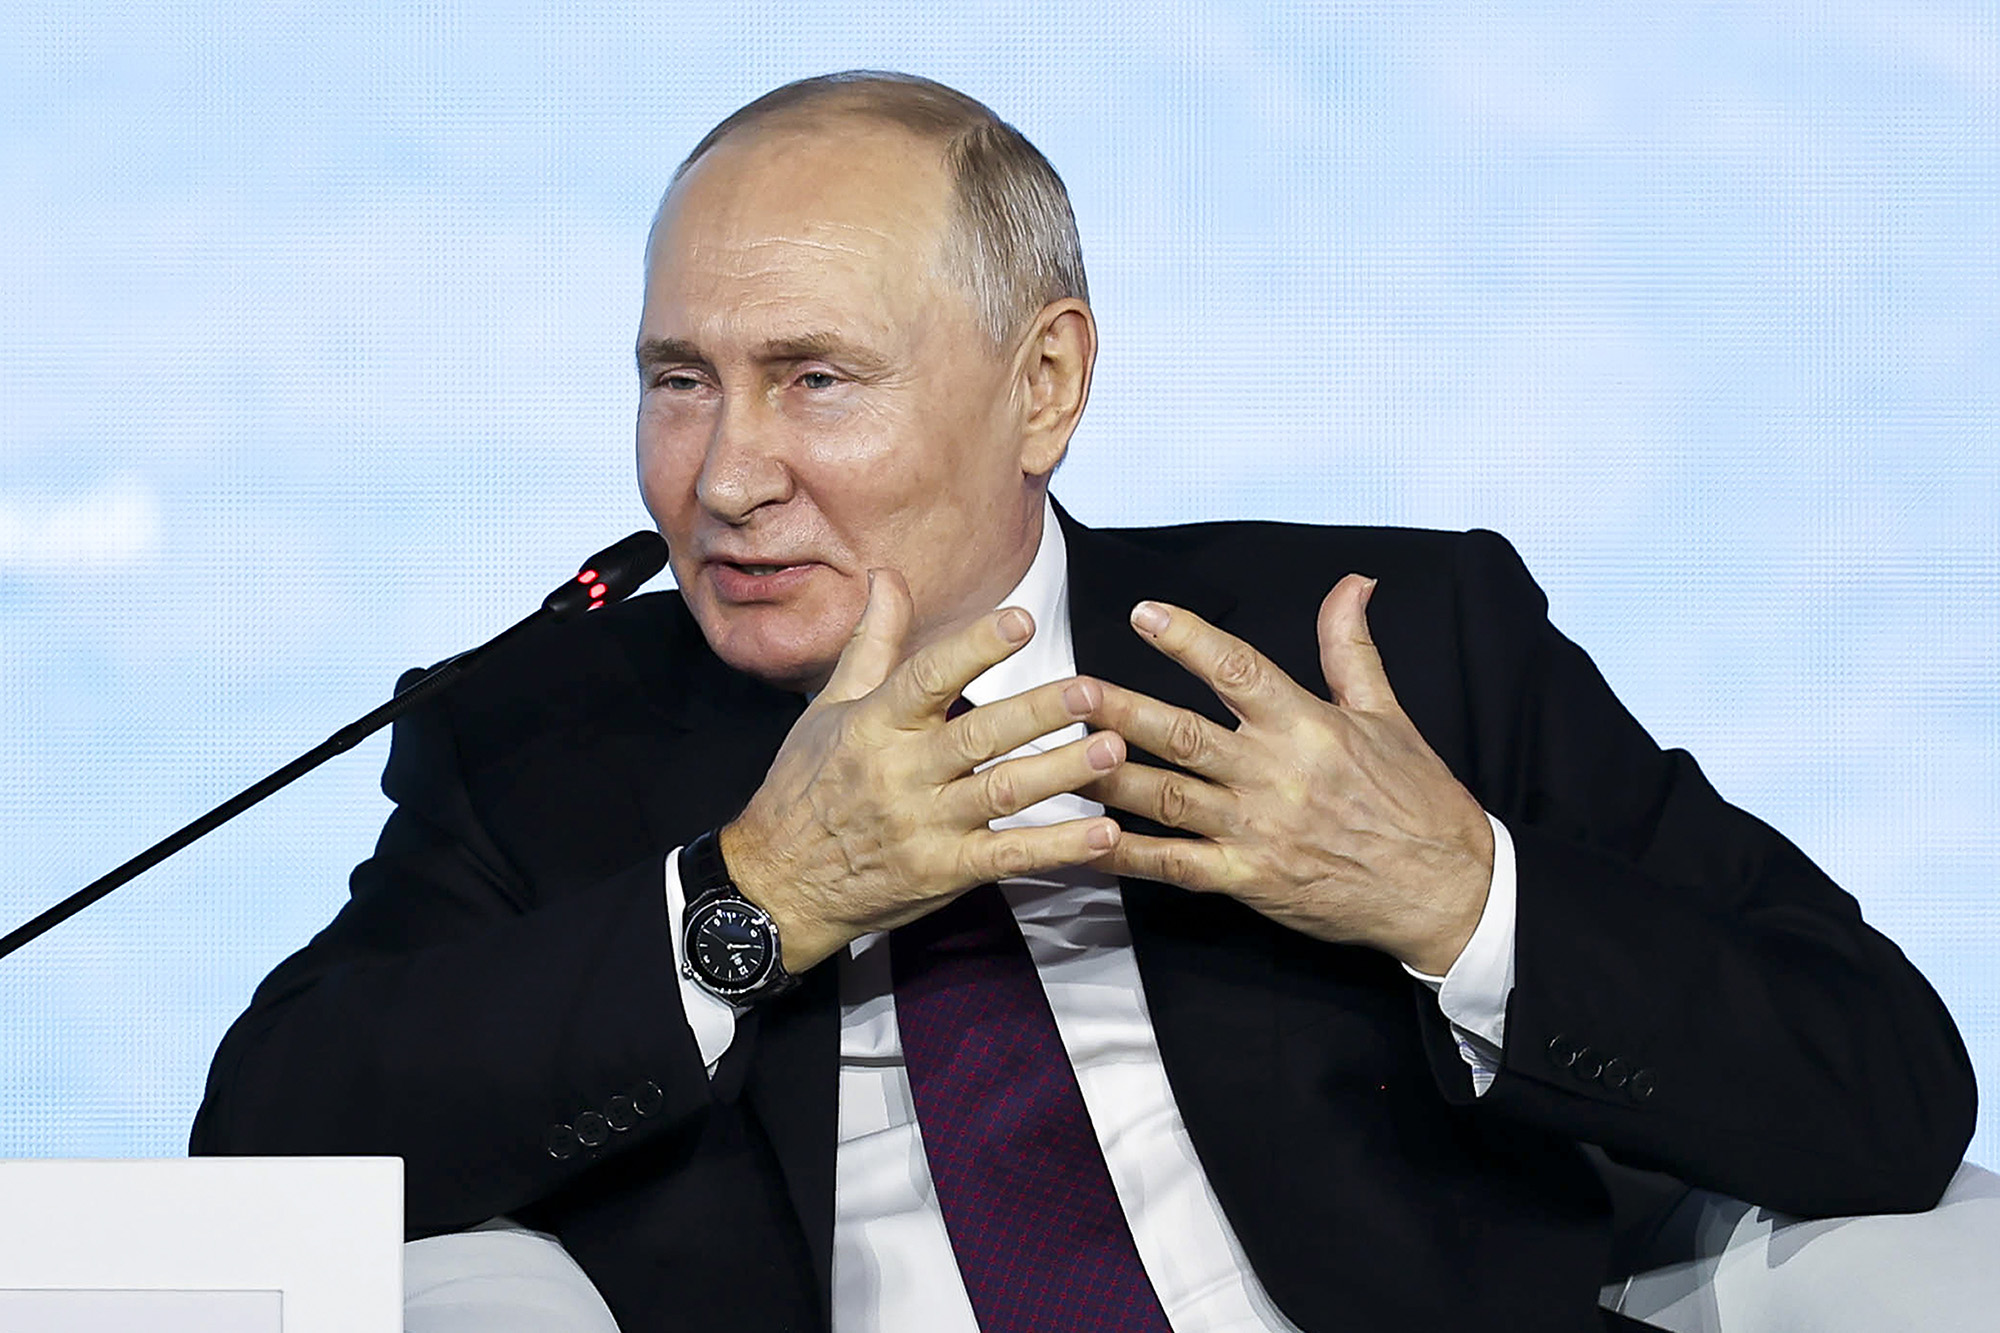 Russian President Vladimir Putin gestures while speaking at the Eastern Economic Forum in Vladivostok, Russia, on September 12.